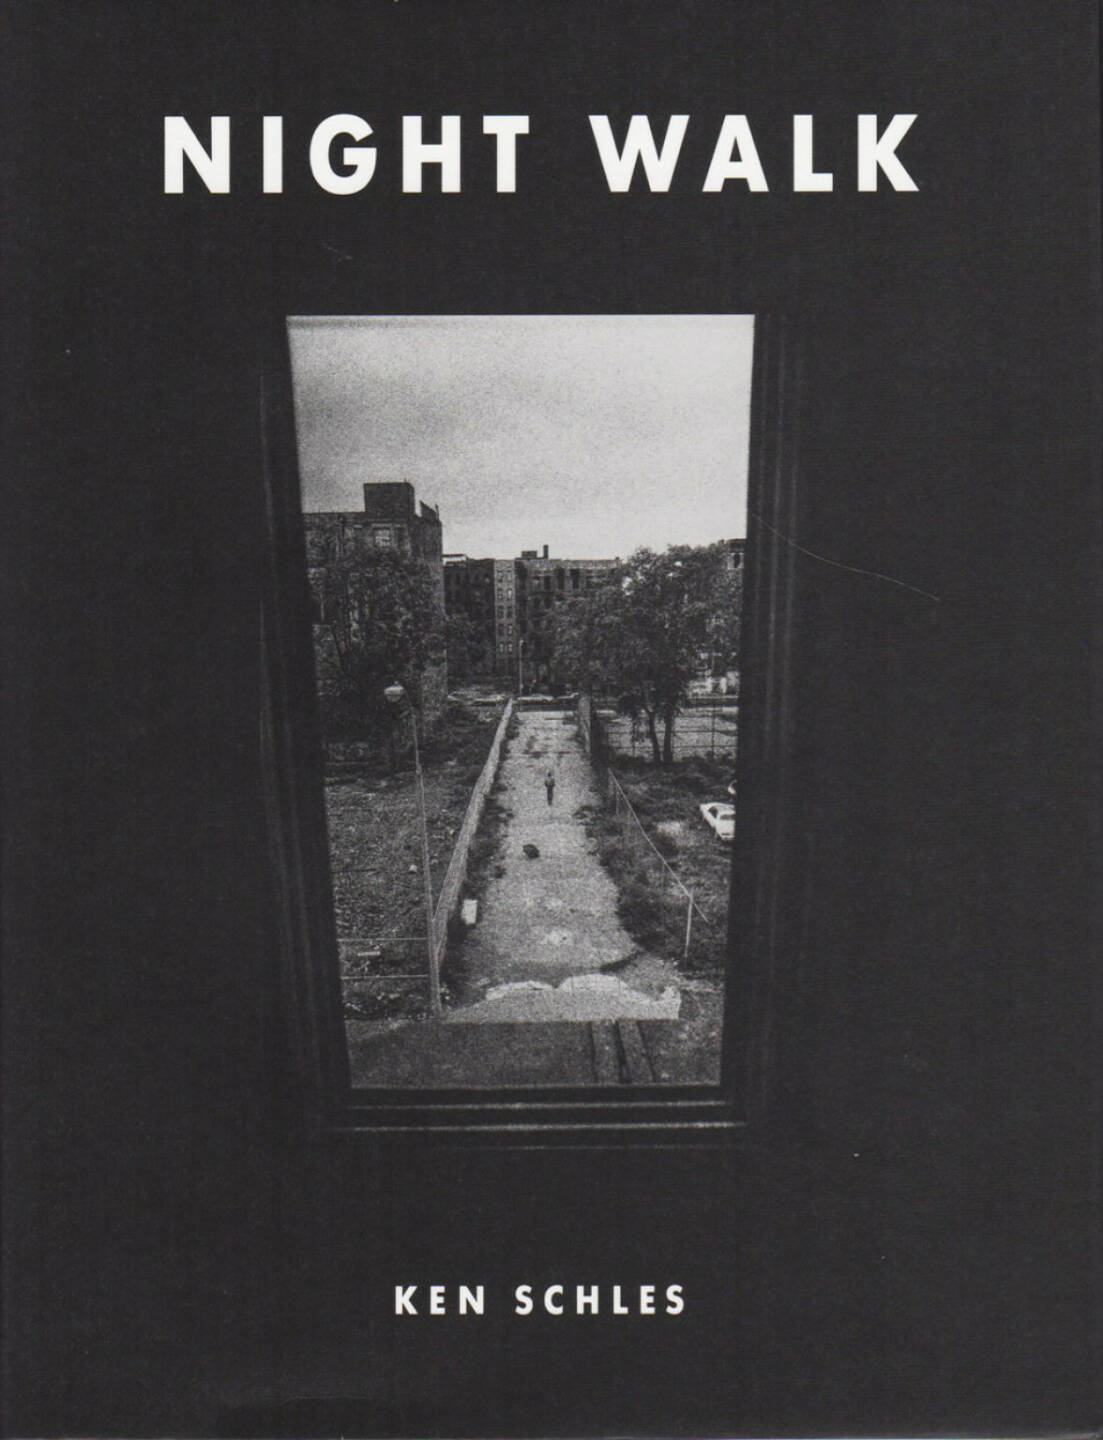 Ken Schles - Night Walk, Steidl 2014, Cover - http://josefchladek.com/book/ken_schles_-_night_walk